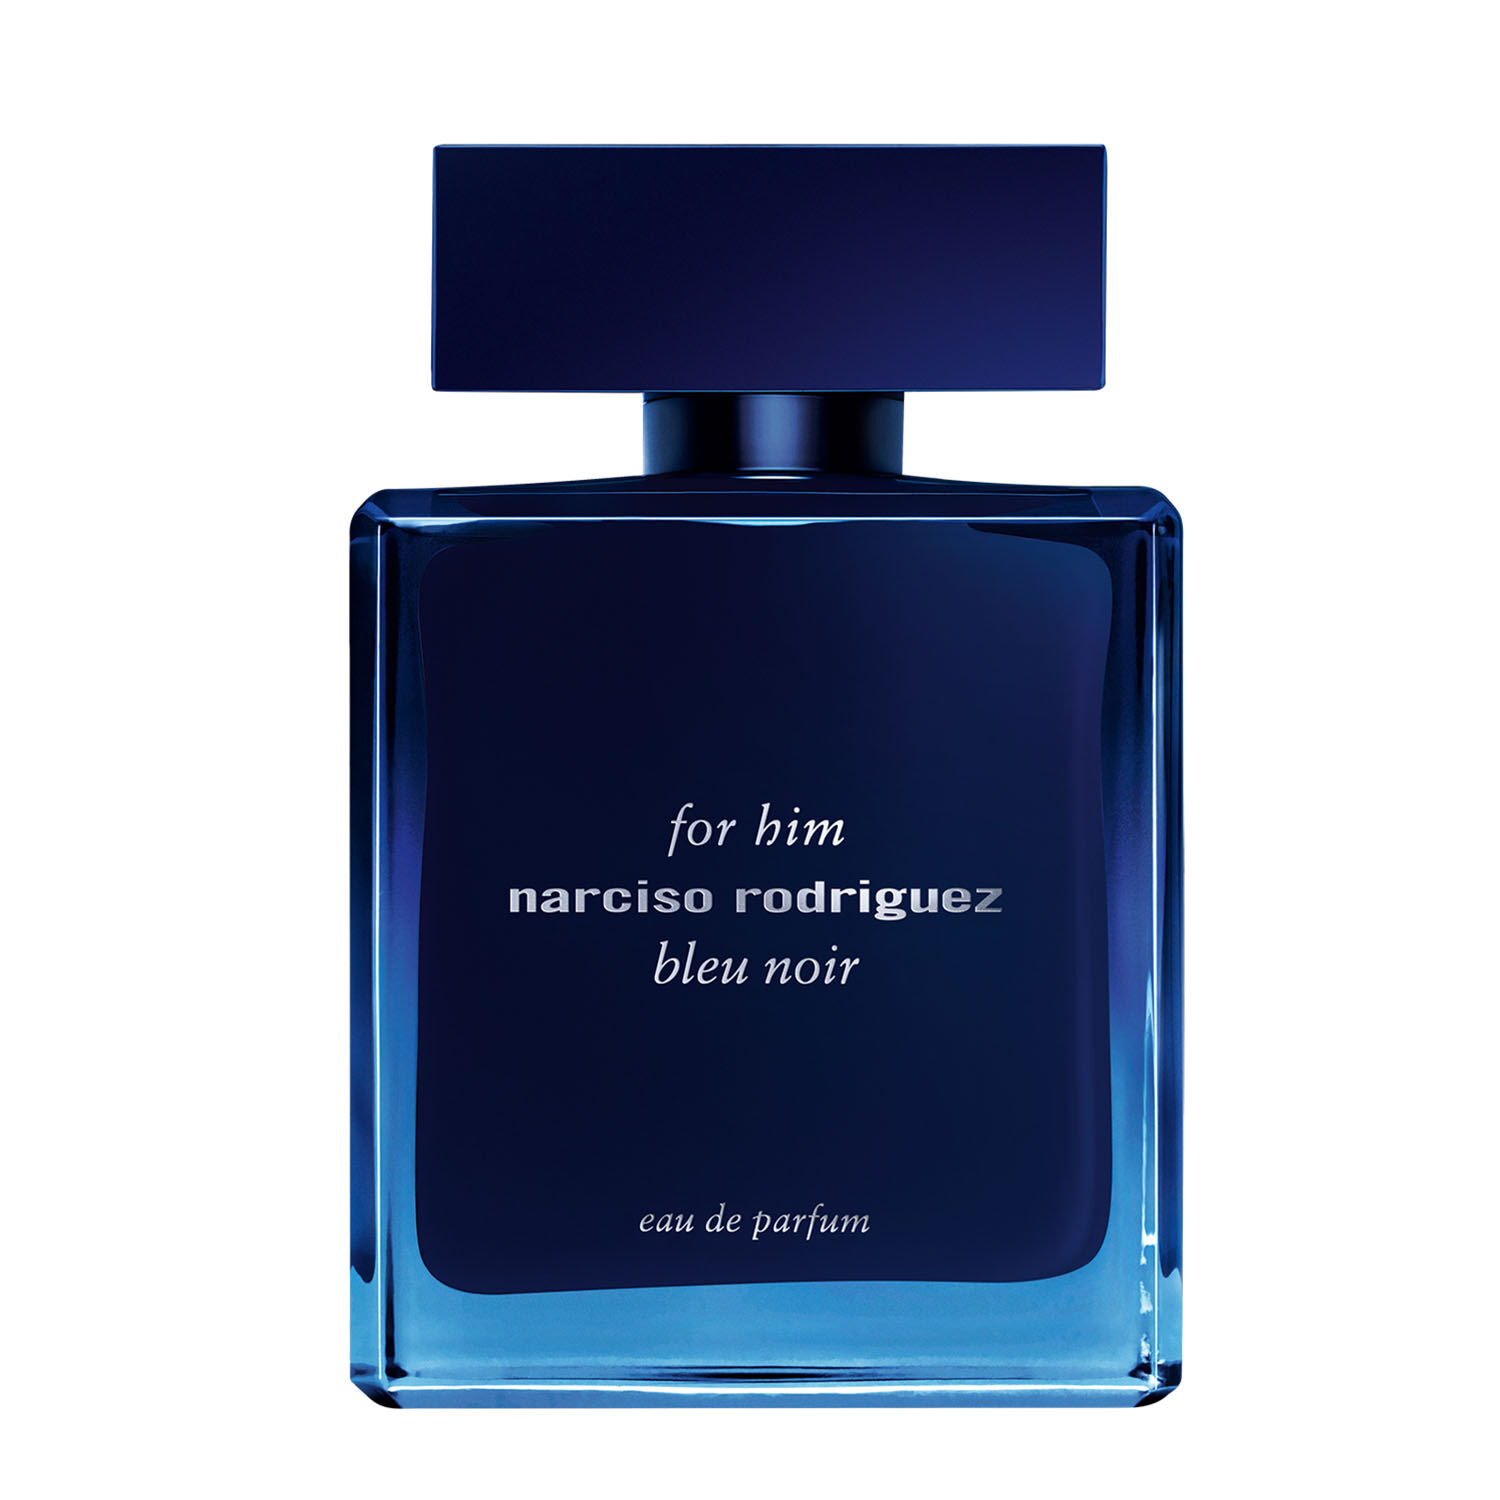 dark blue perfume bottle